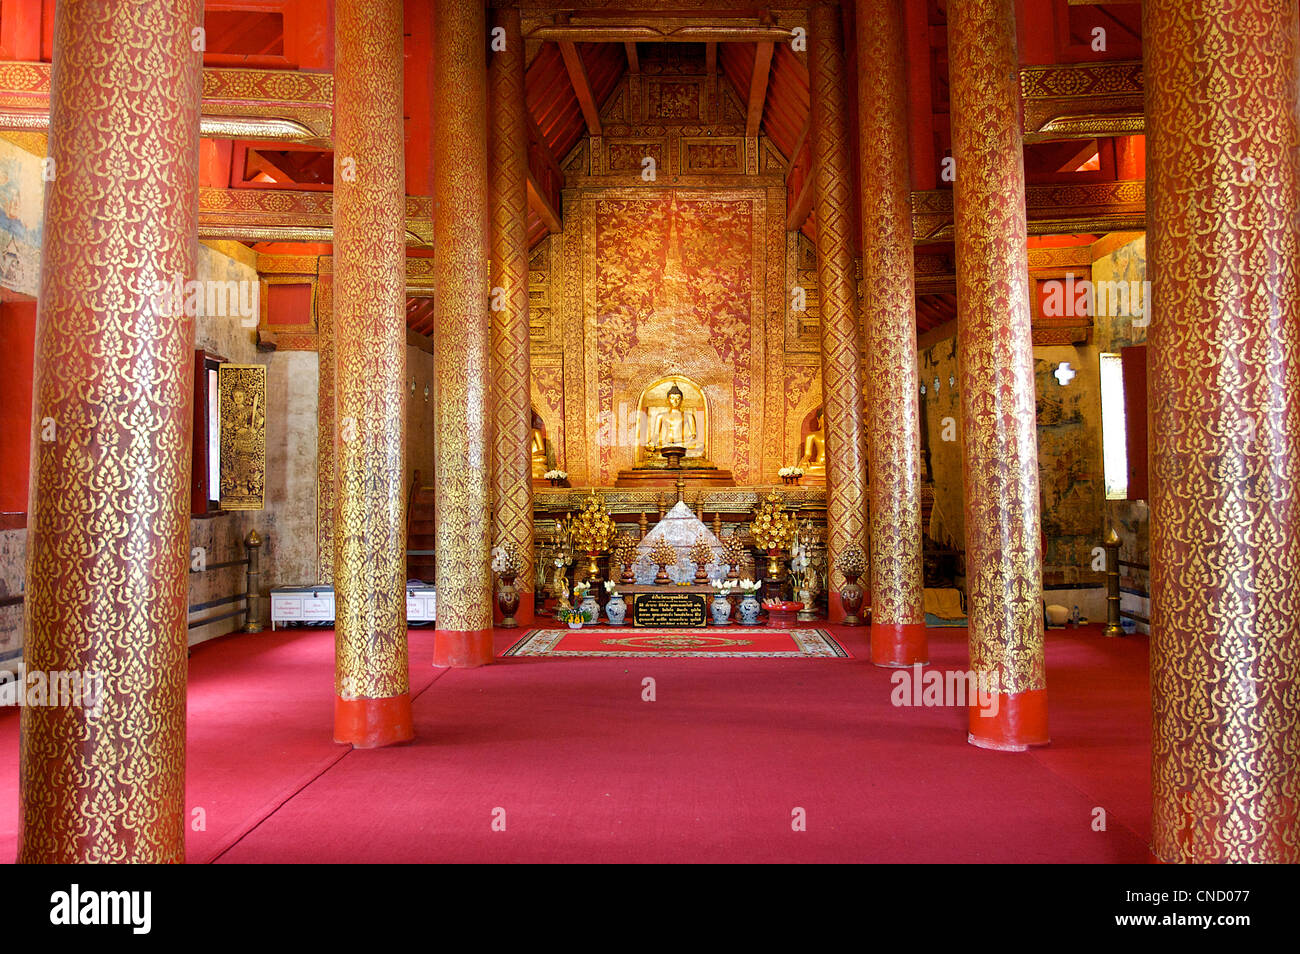 main temple, pra sing buddha image,monastery ,wat pra sing temple,religion,buddhism, chiang mai,Thailand Stock Photo